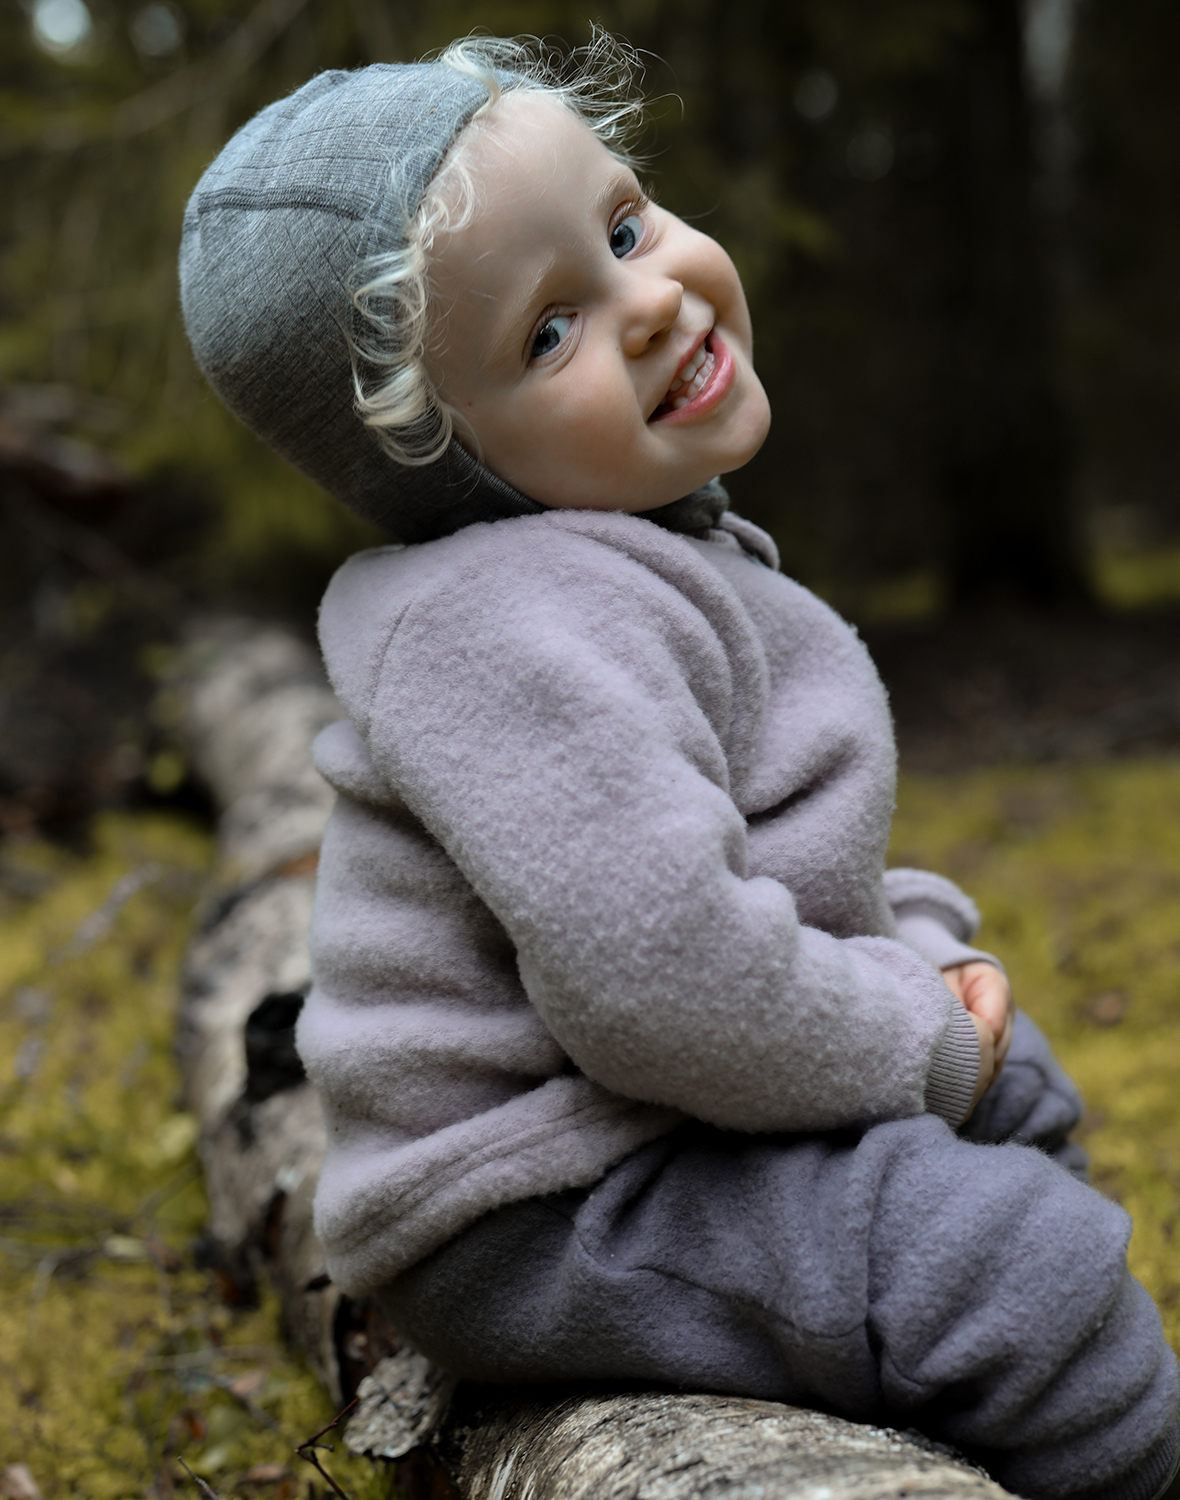 Baby merino wool fleece jacket - Beige melange - Dilling